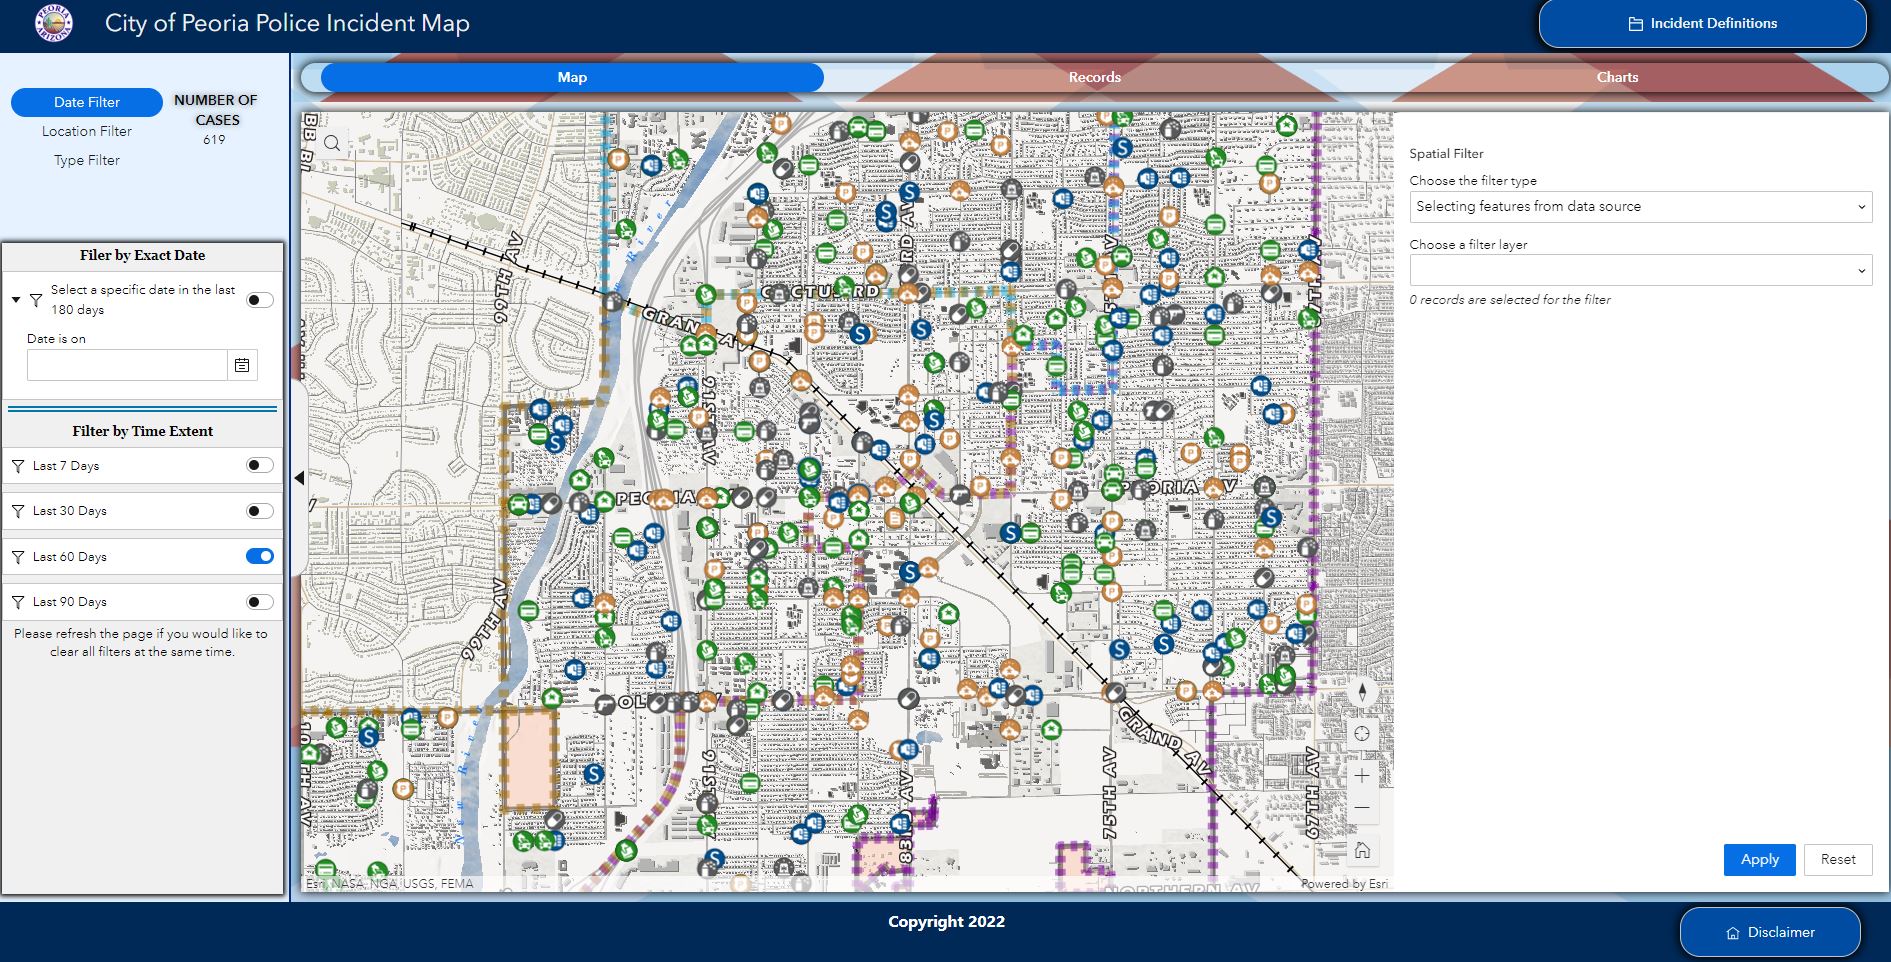 Peoria Police Department unveils interactive incident map